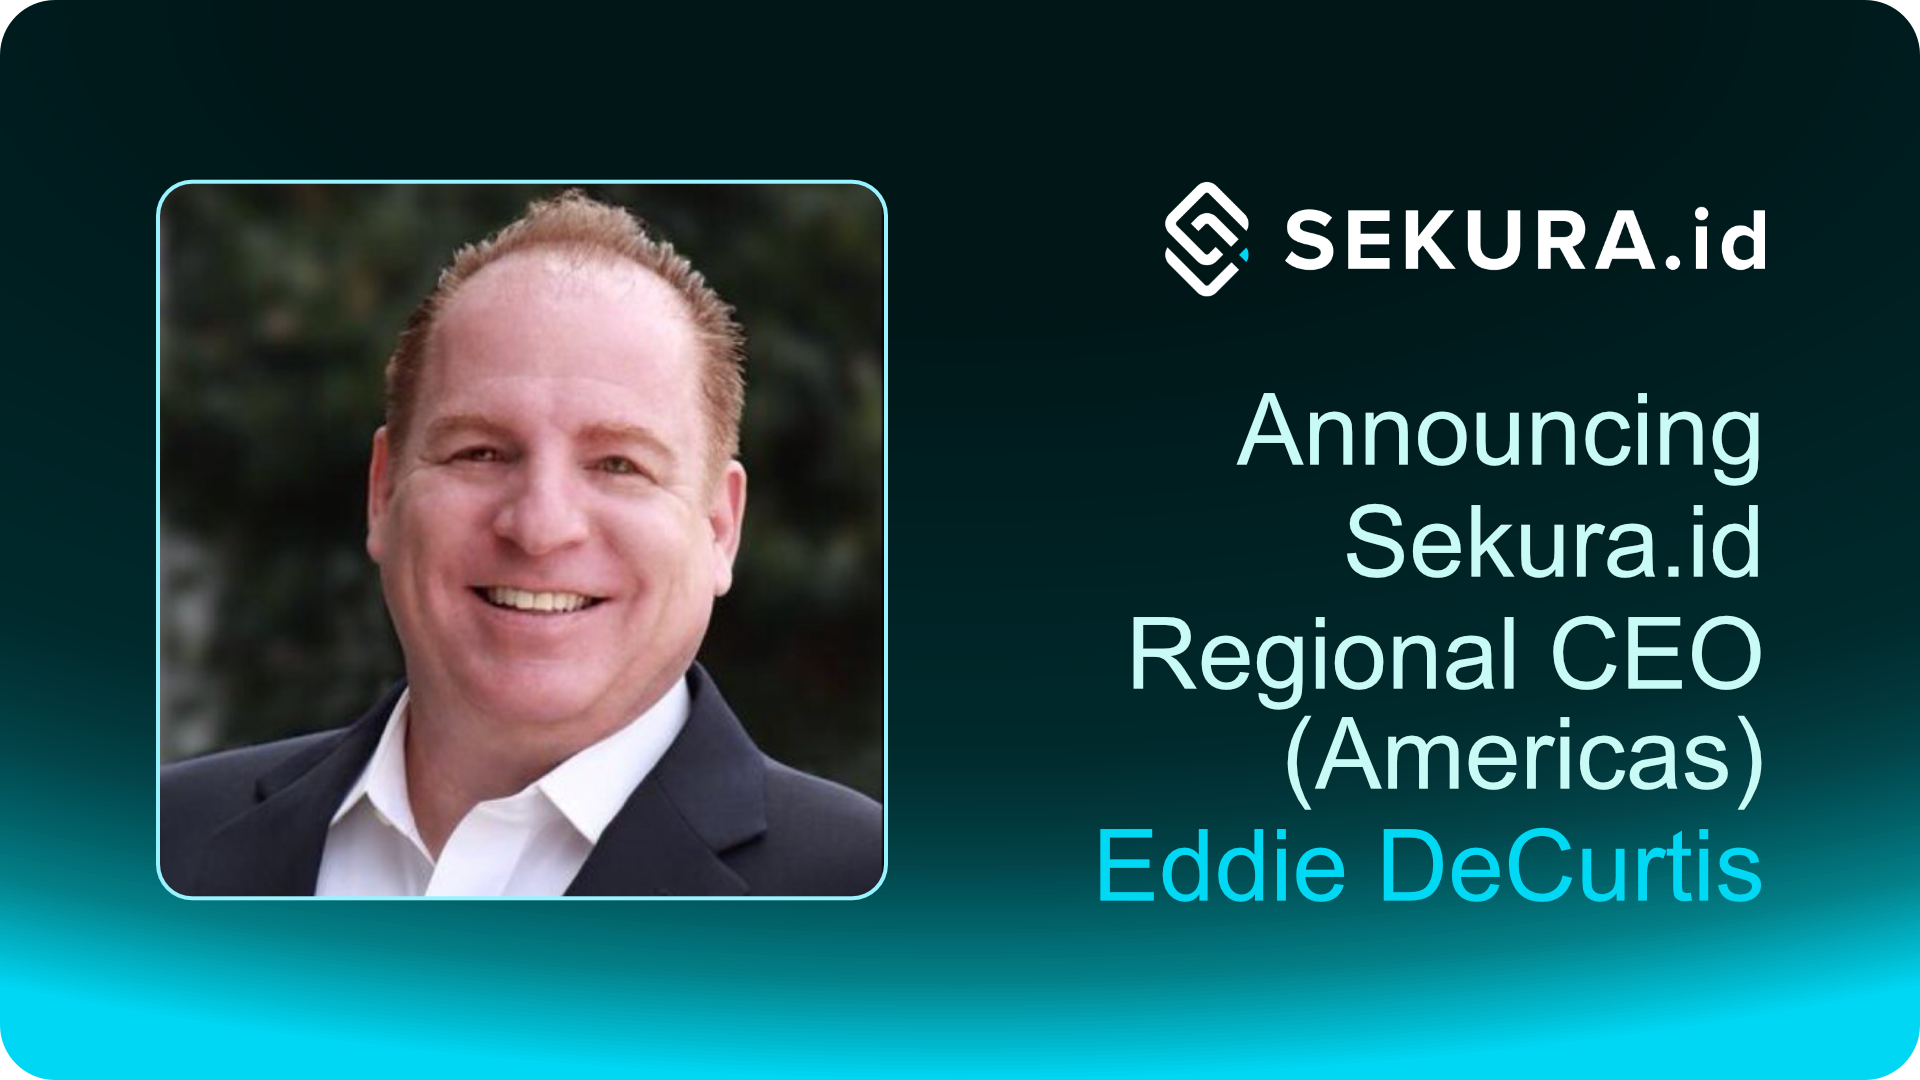 Sekura.id announces Eddie DeCurtis as Regional CEO (Americas)